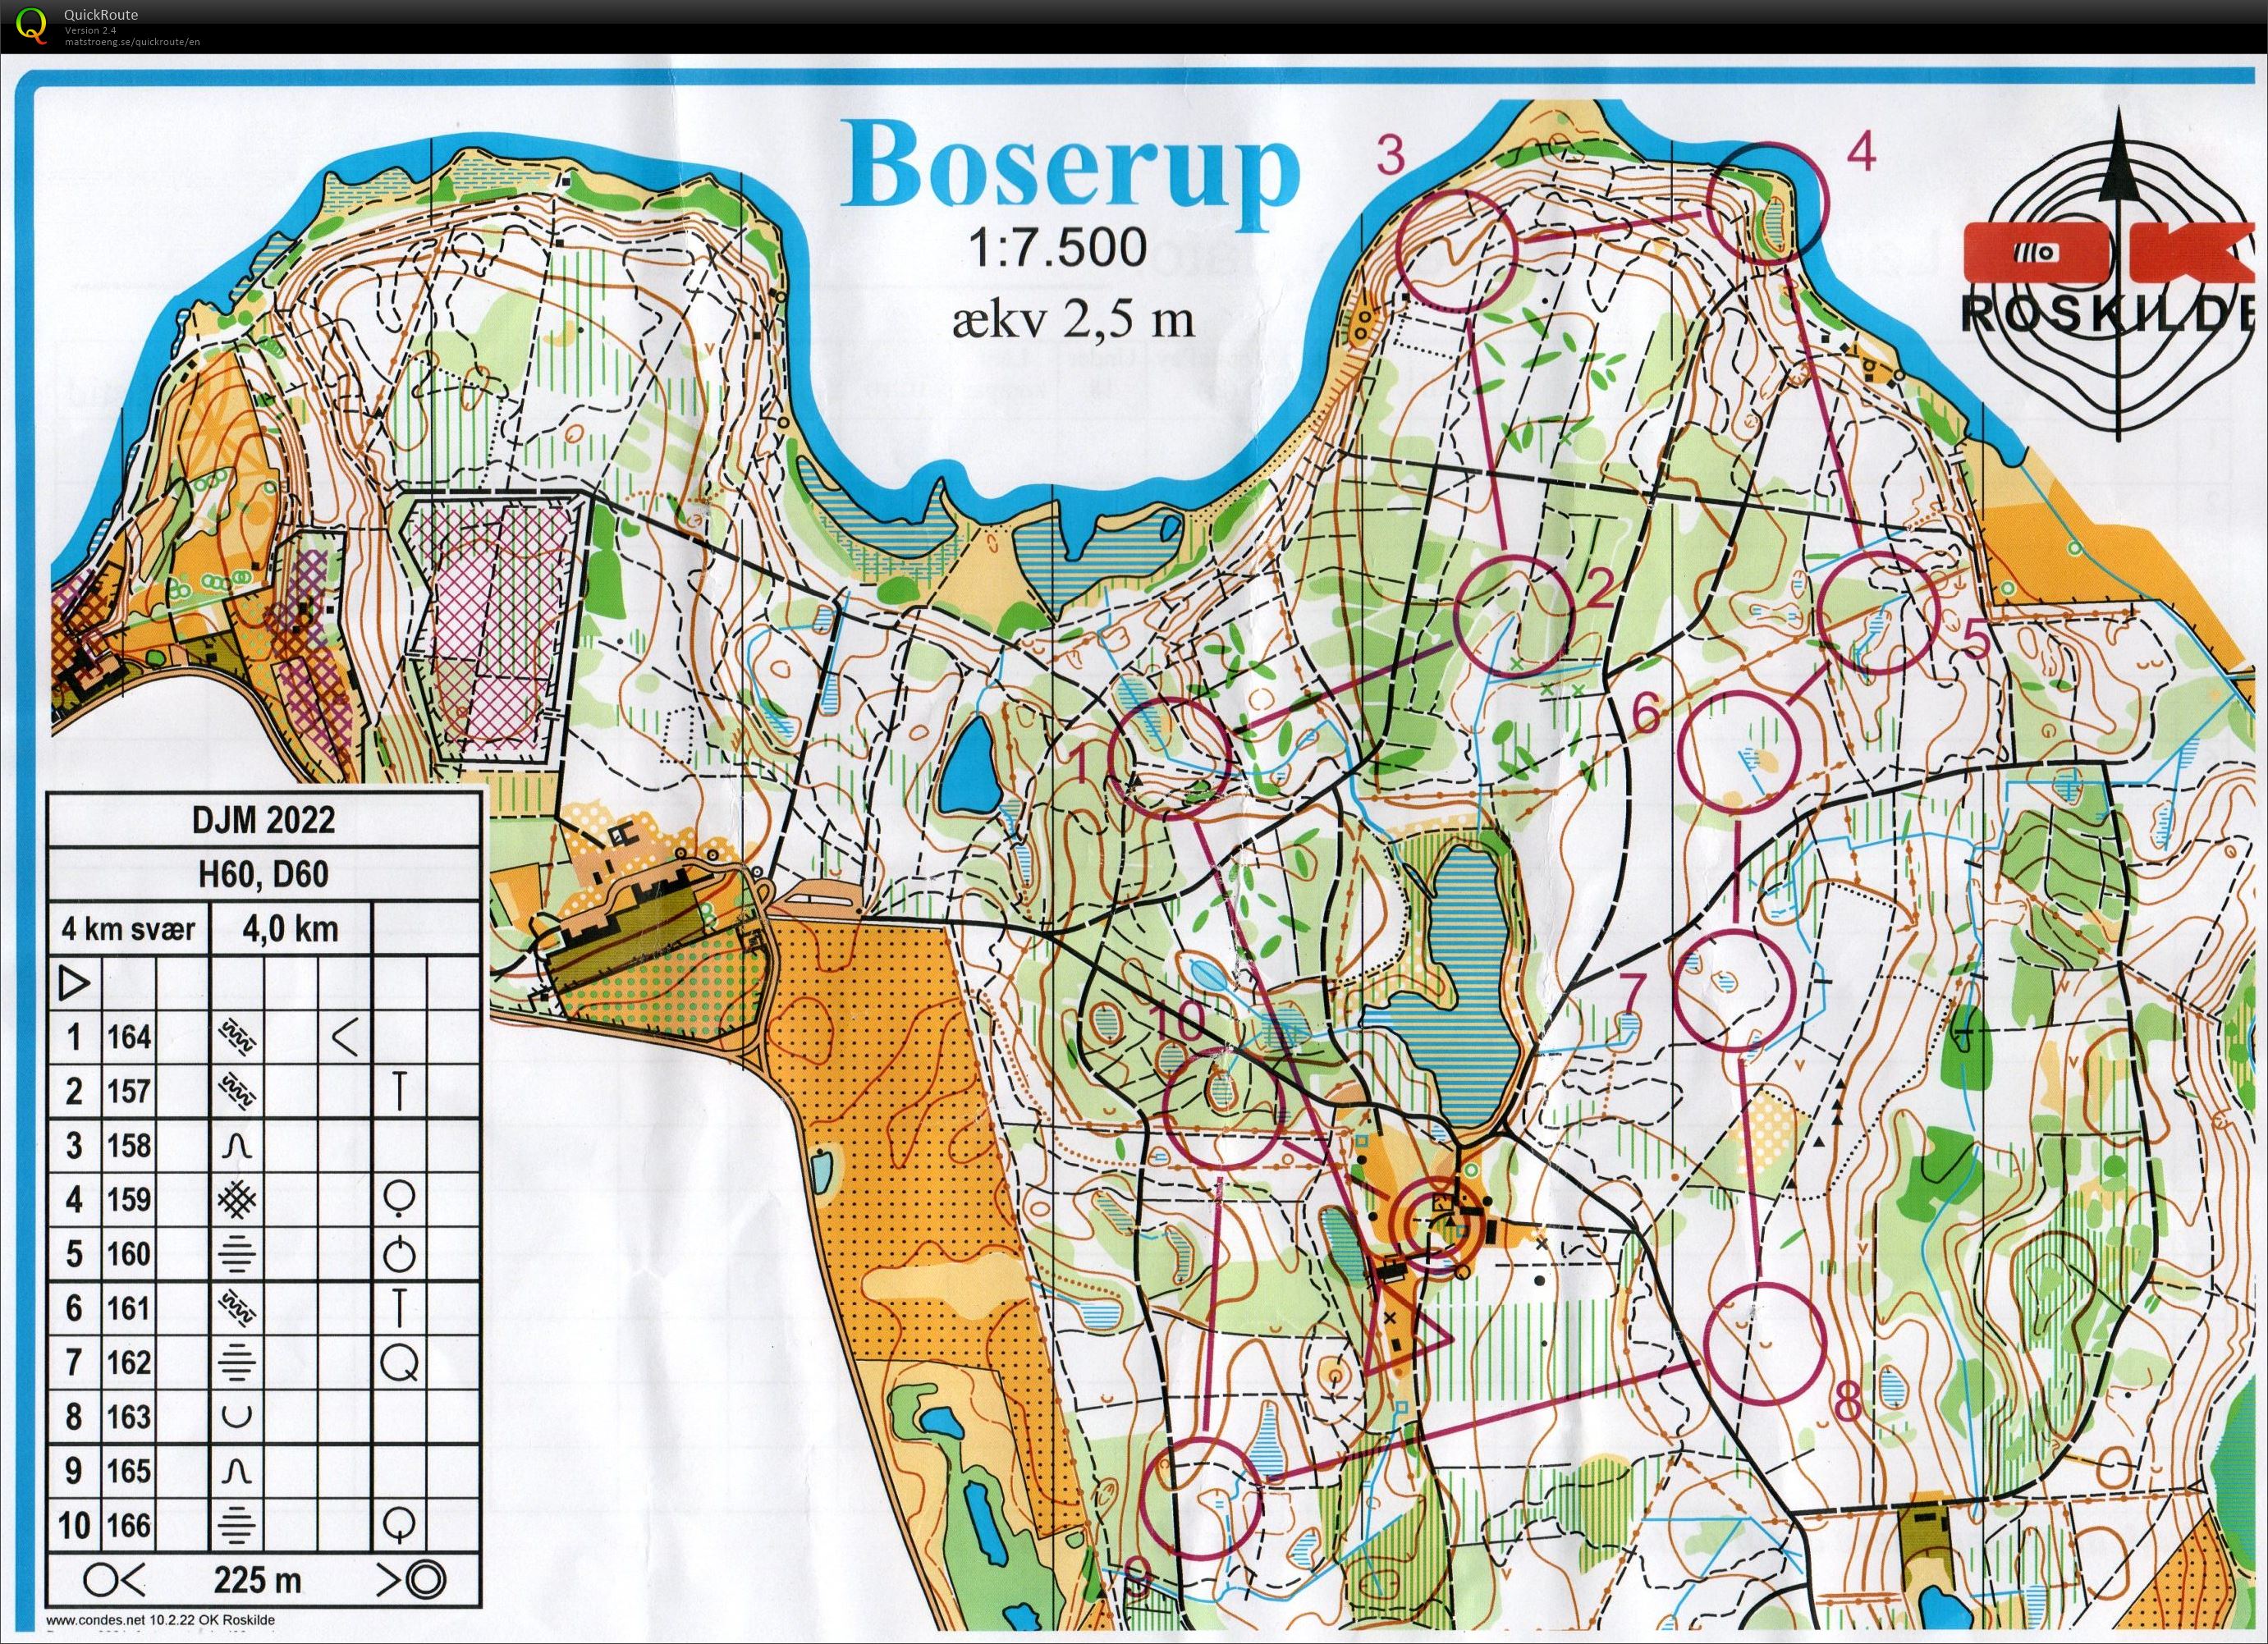 Lørdagsløb i Boserup (2022-06-25)